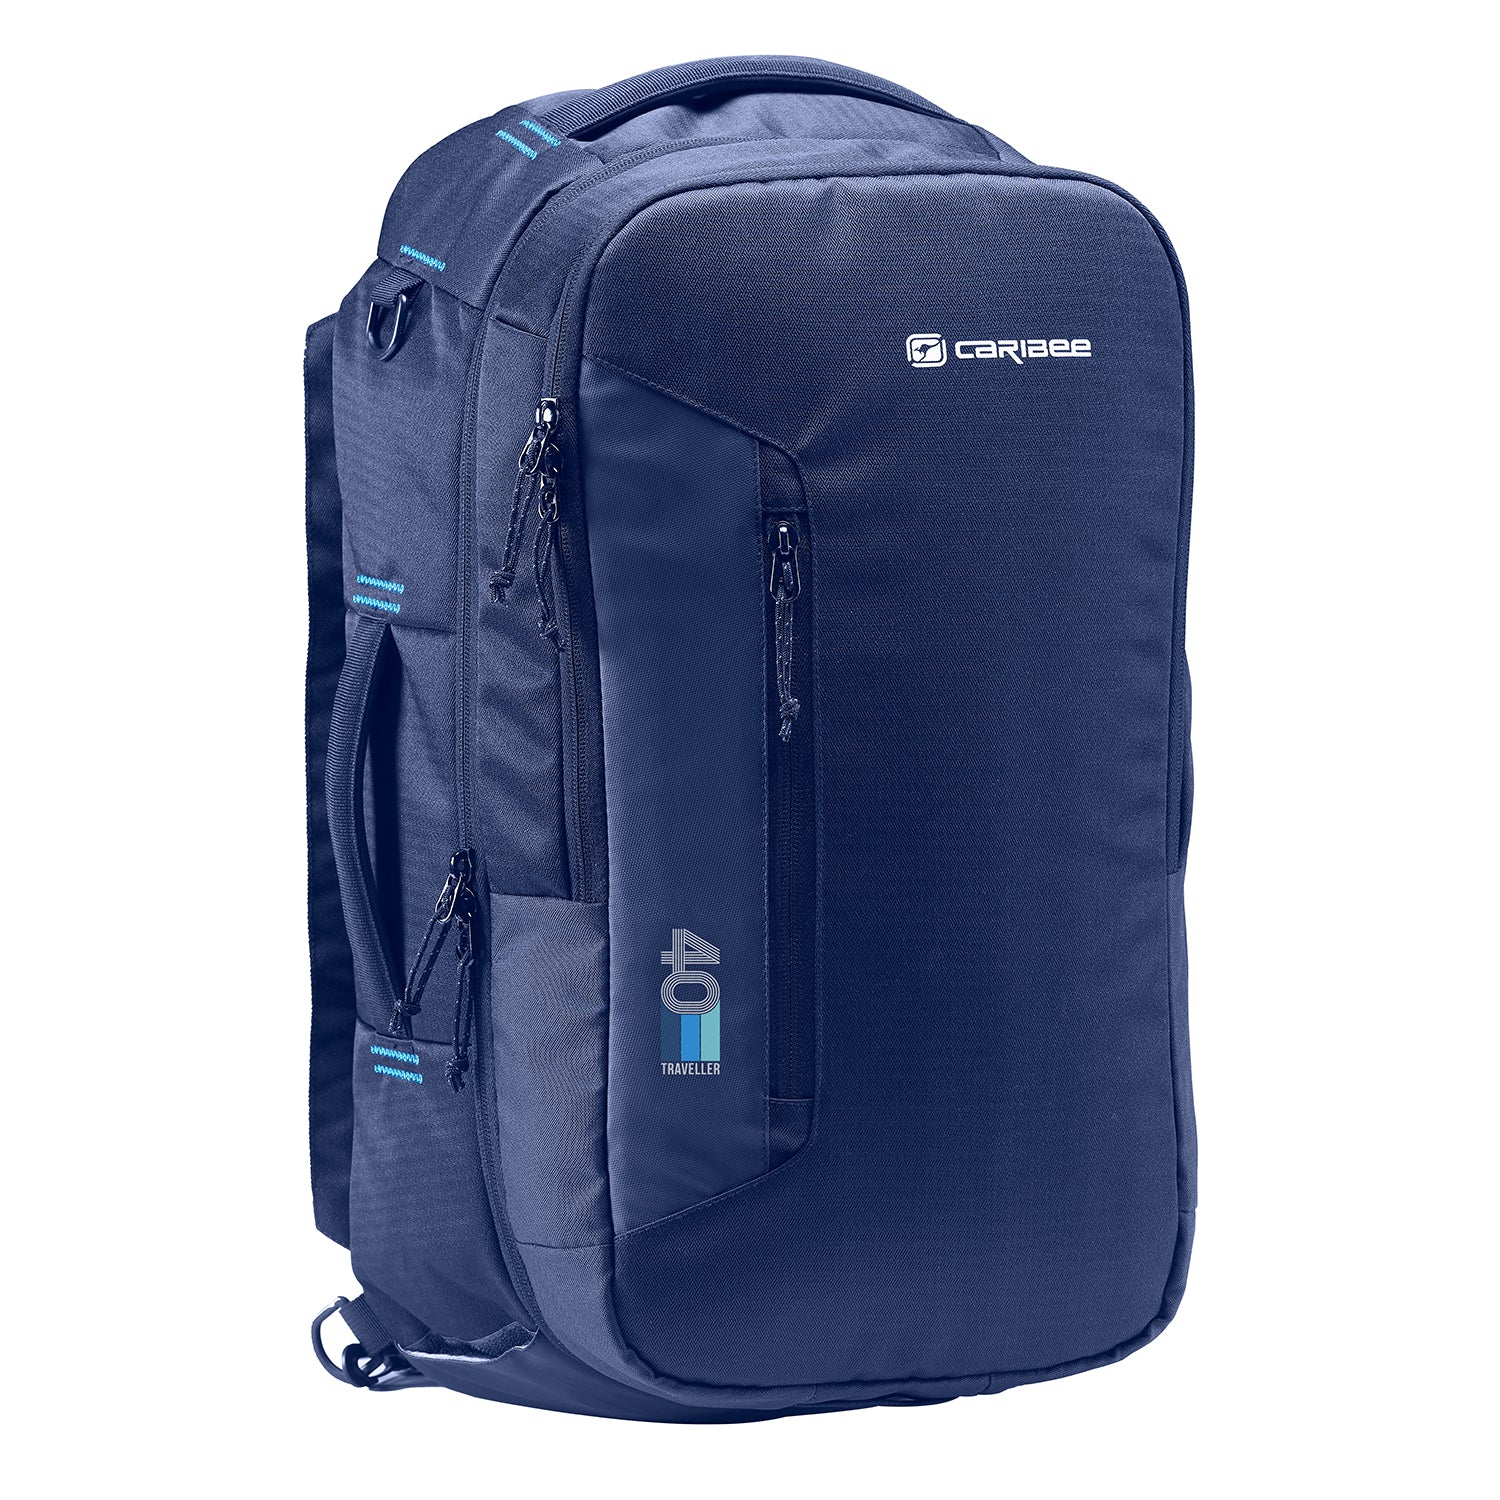 Caribee- 69061 Traveller 40lt Duffle-Backpack travel bag - Navy-1